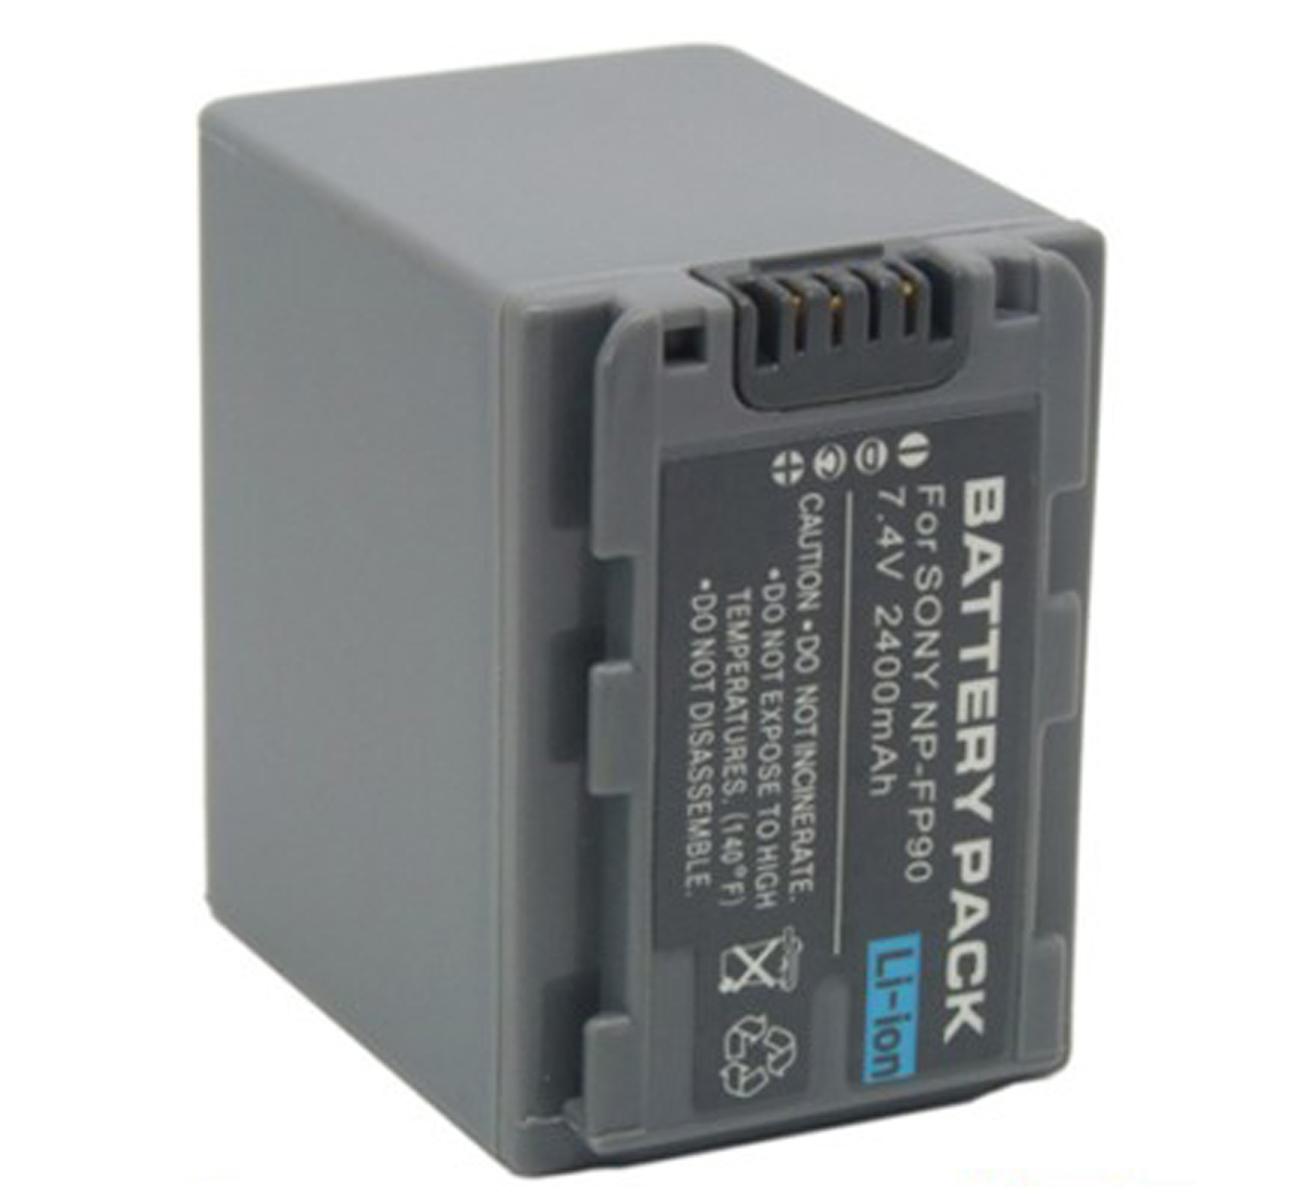 Изображение товара: Аккумулятор для Sony NP-FP30, NP-FP50, NP-FP51, NP-FP60, NP-FP70, NP-FP71, NP-FP90, NP-FP91, Series P